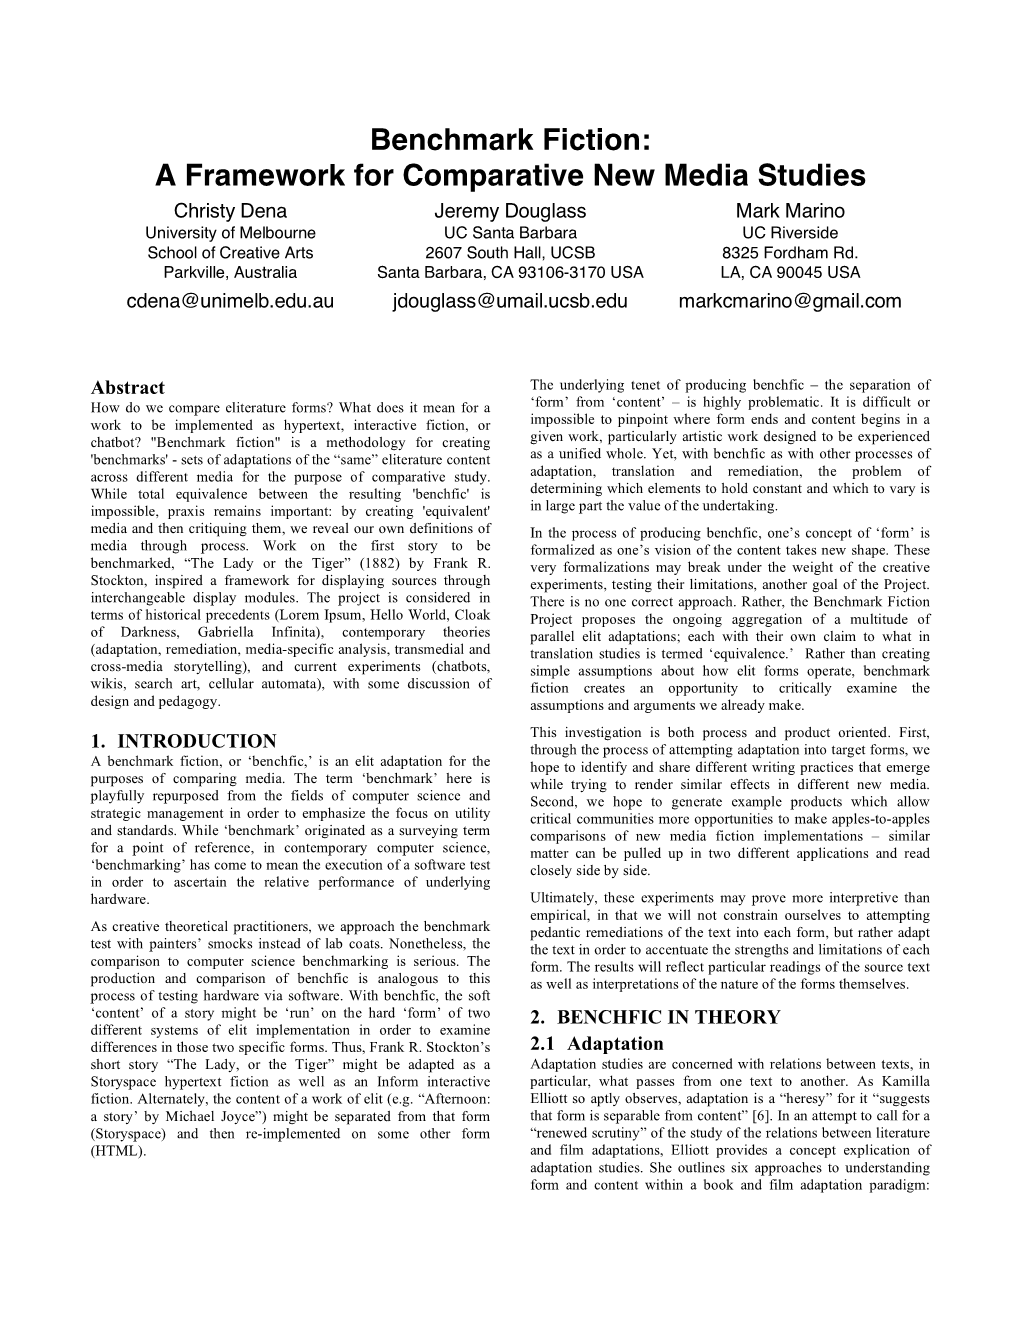 Benchmark Fiction: a Framework for Comparative New Media Studies